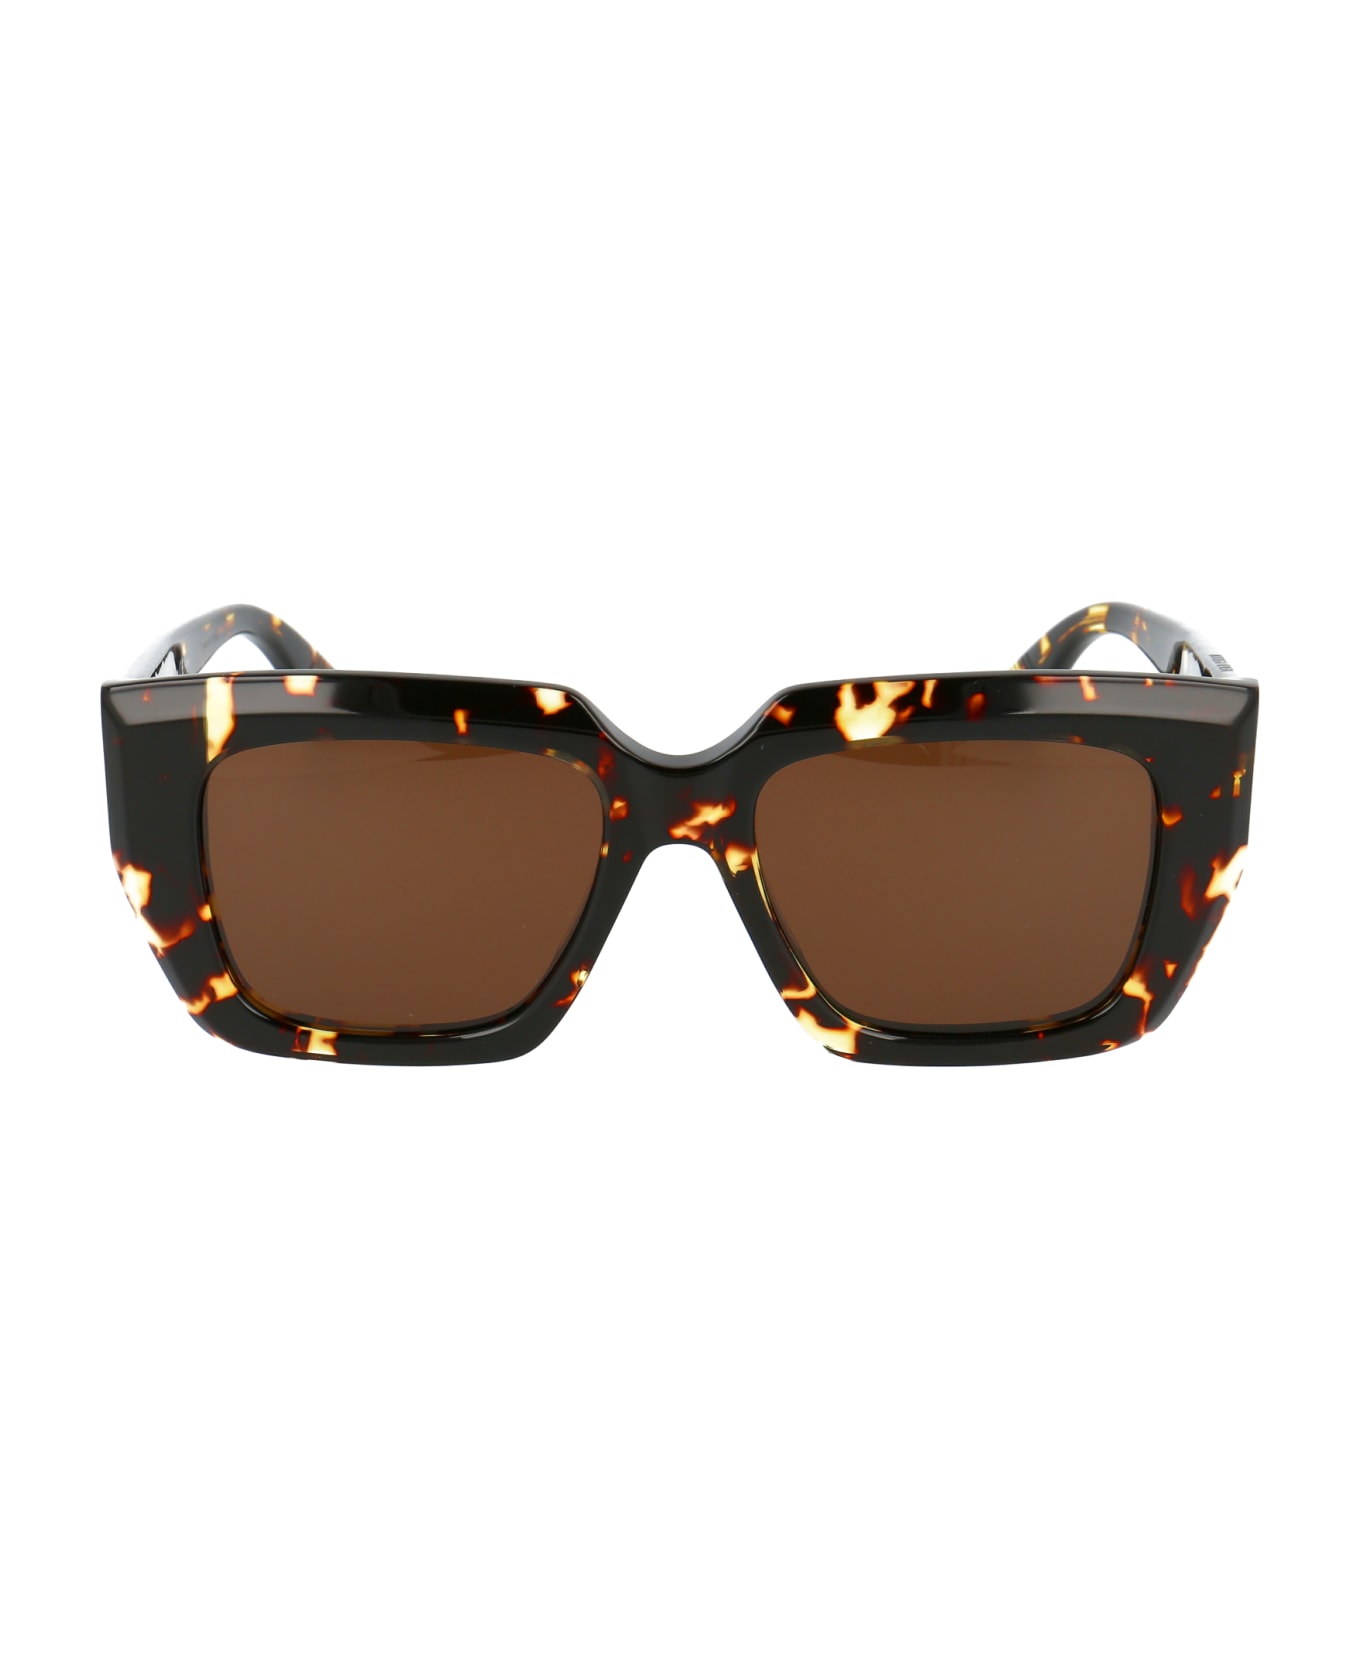 Bottega Veneta Eyewear Bv1030s Sunglasses - 002 HAVANA HAVANA BROWN